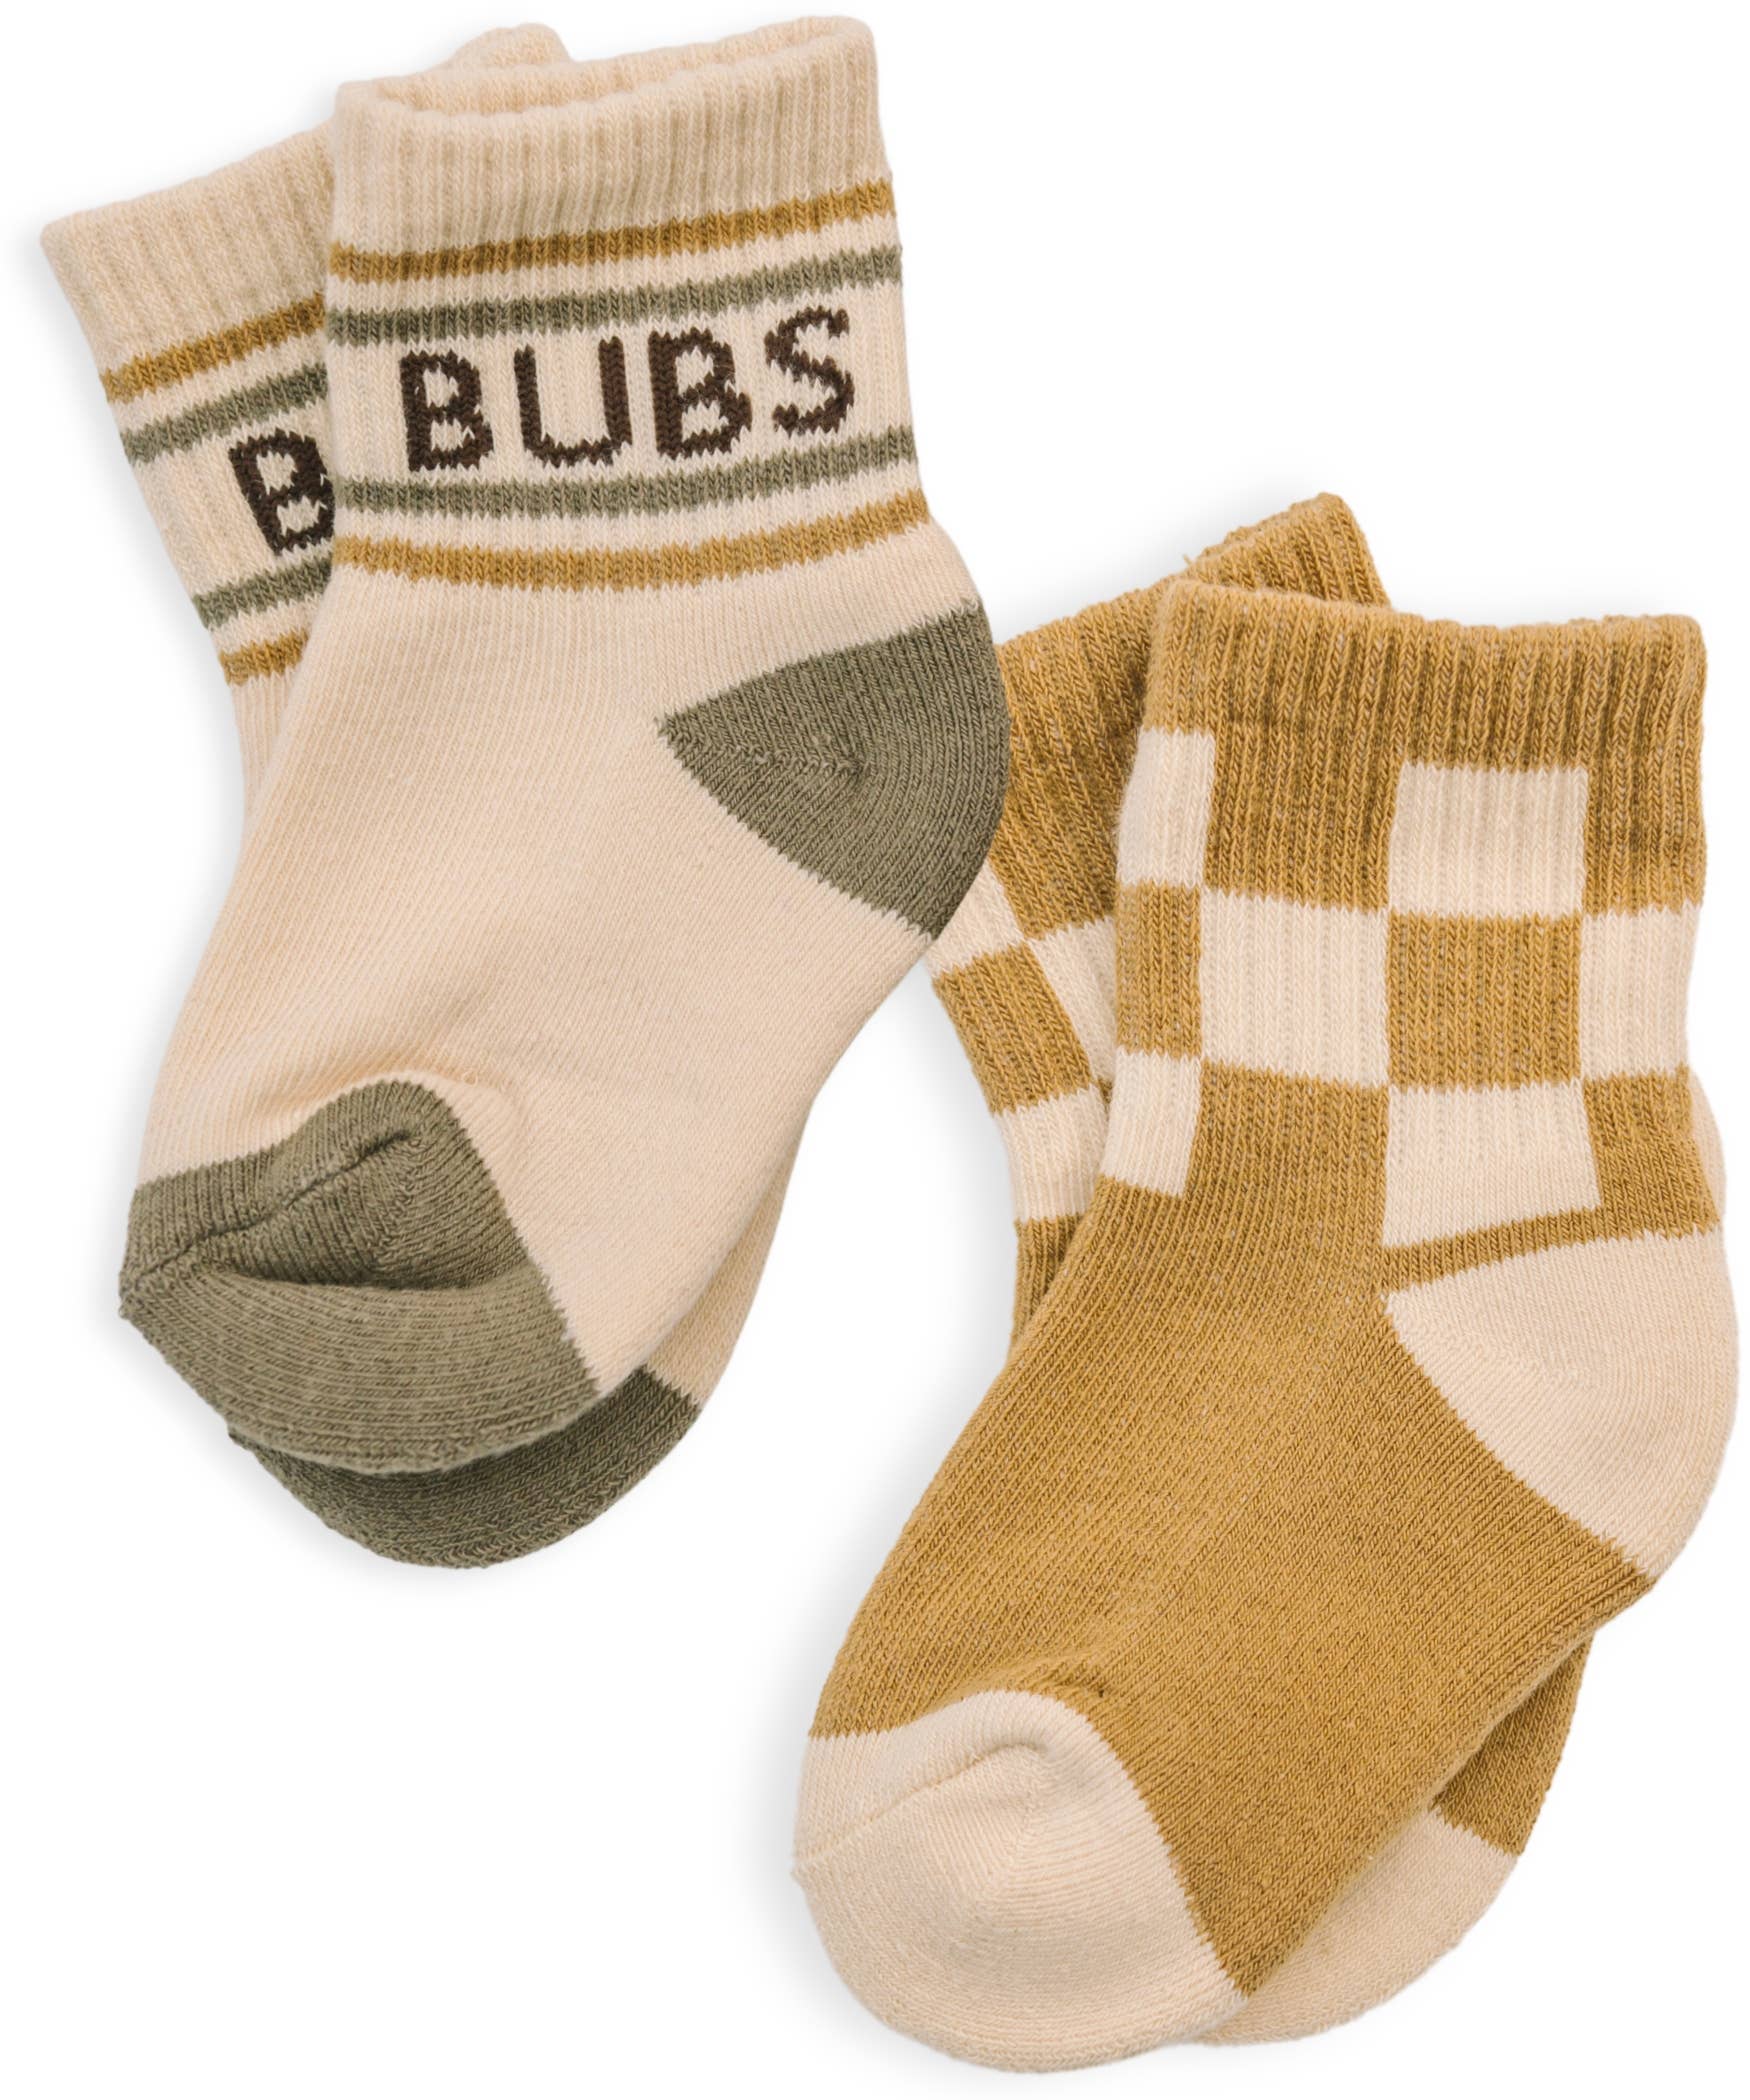 Bubs + Checkered Sock Pair